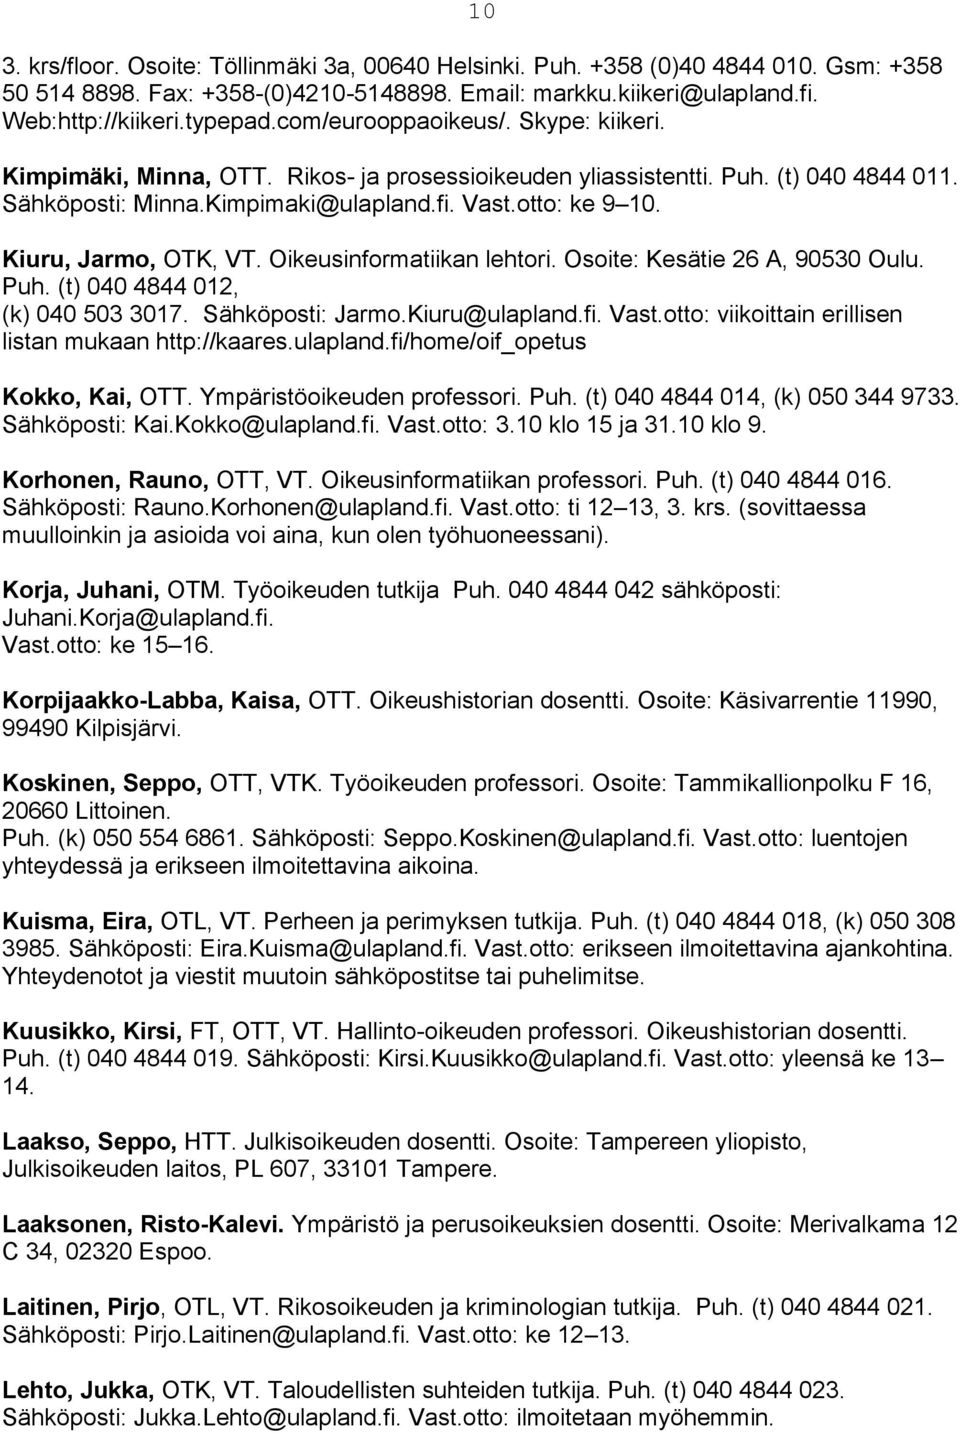 Kiuru, Jarmo, OTK, VT. Oikeusinformatiikan lehtori. Osoite: Kesätie 26 A, 90530 Oulu. Puh. (t) 040 4844 012, (k) 040 503 3017. Sähköposti: Jarmo.Kiuru@ulapland.fi. Vast.